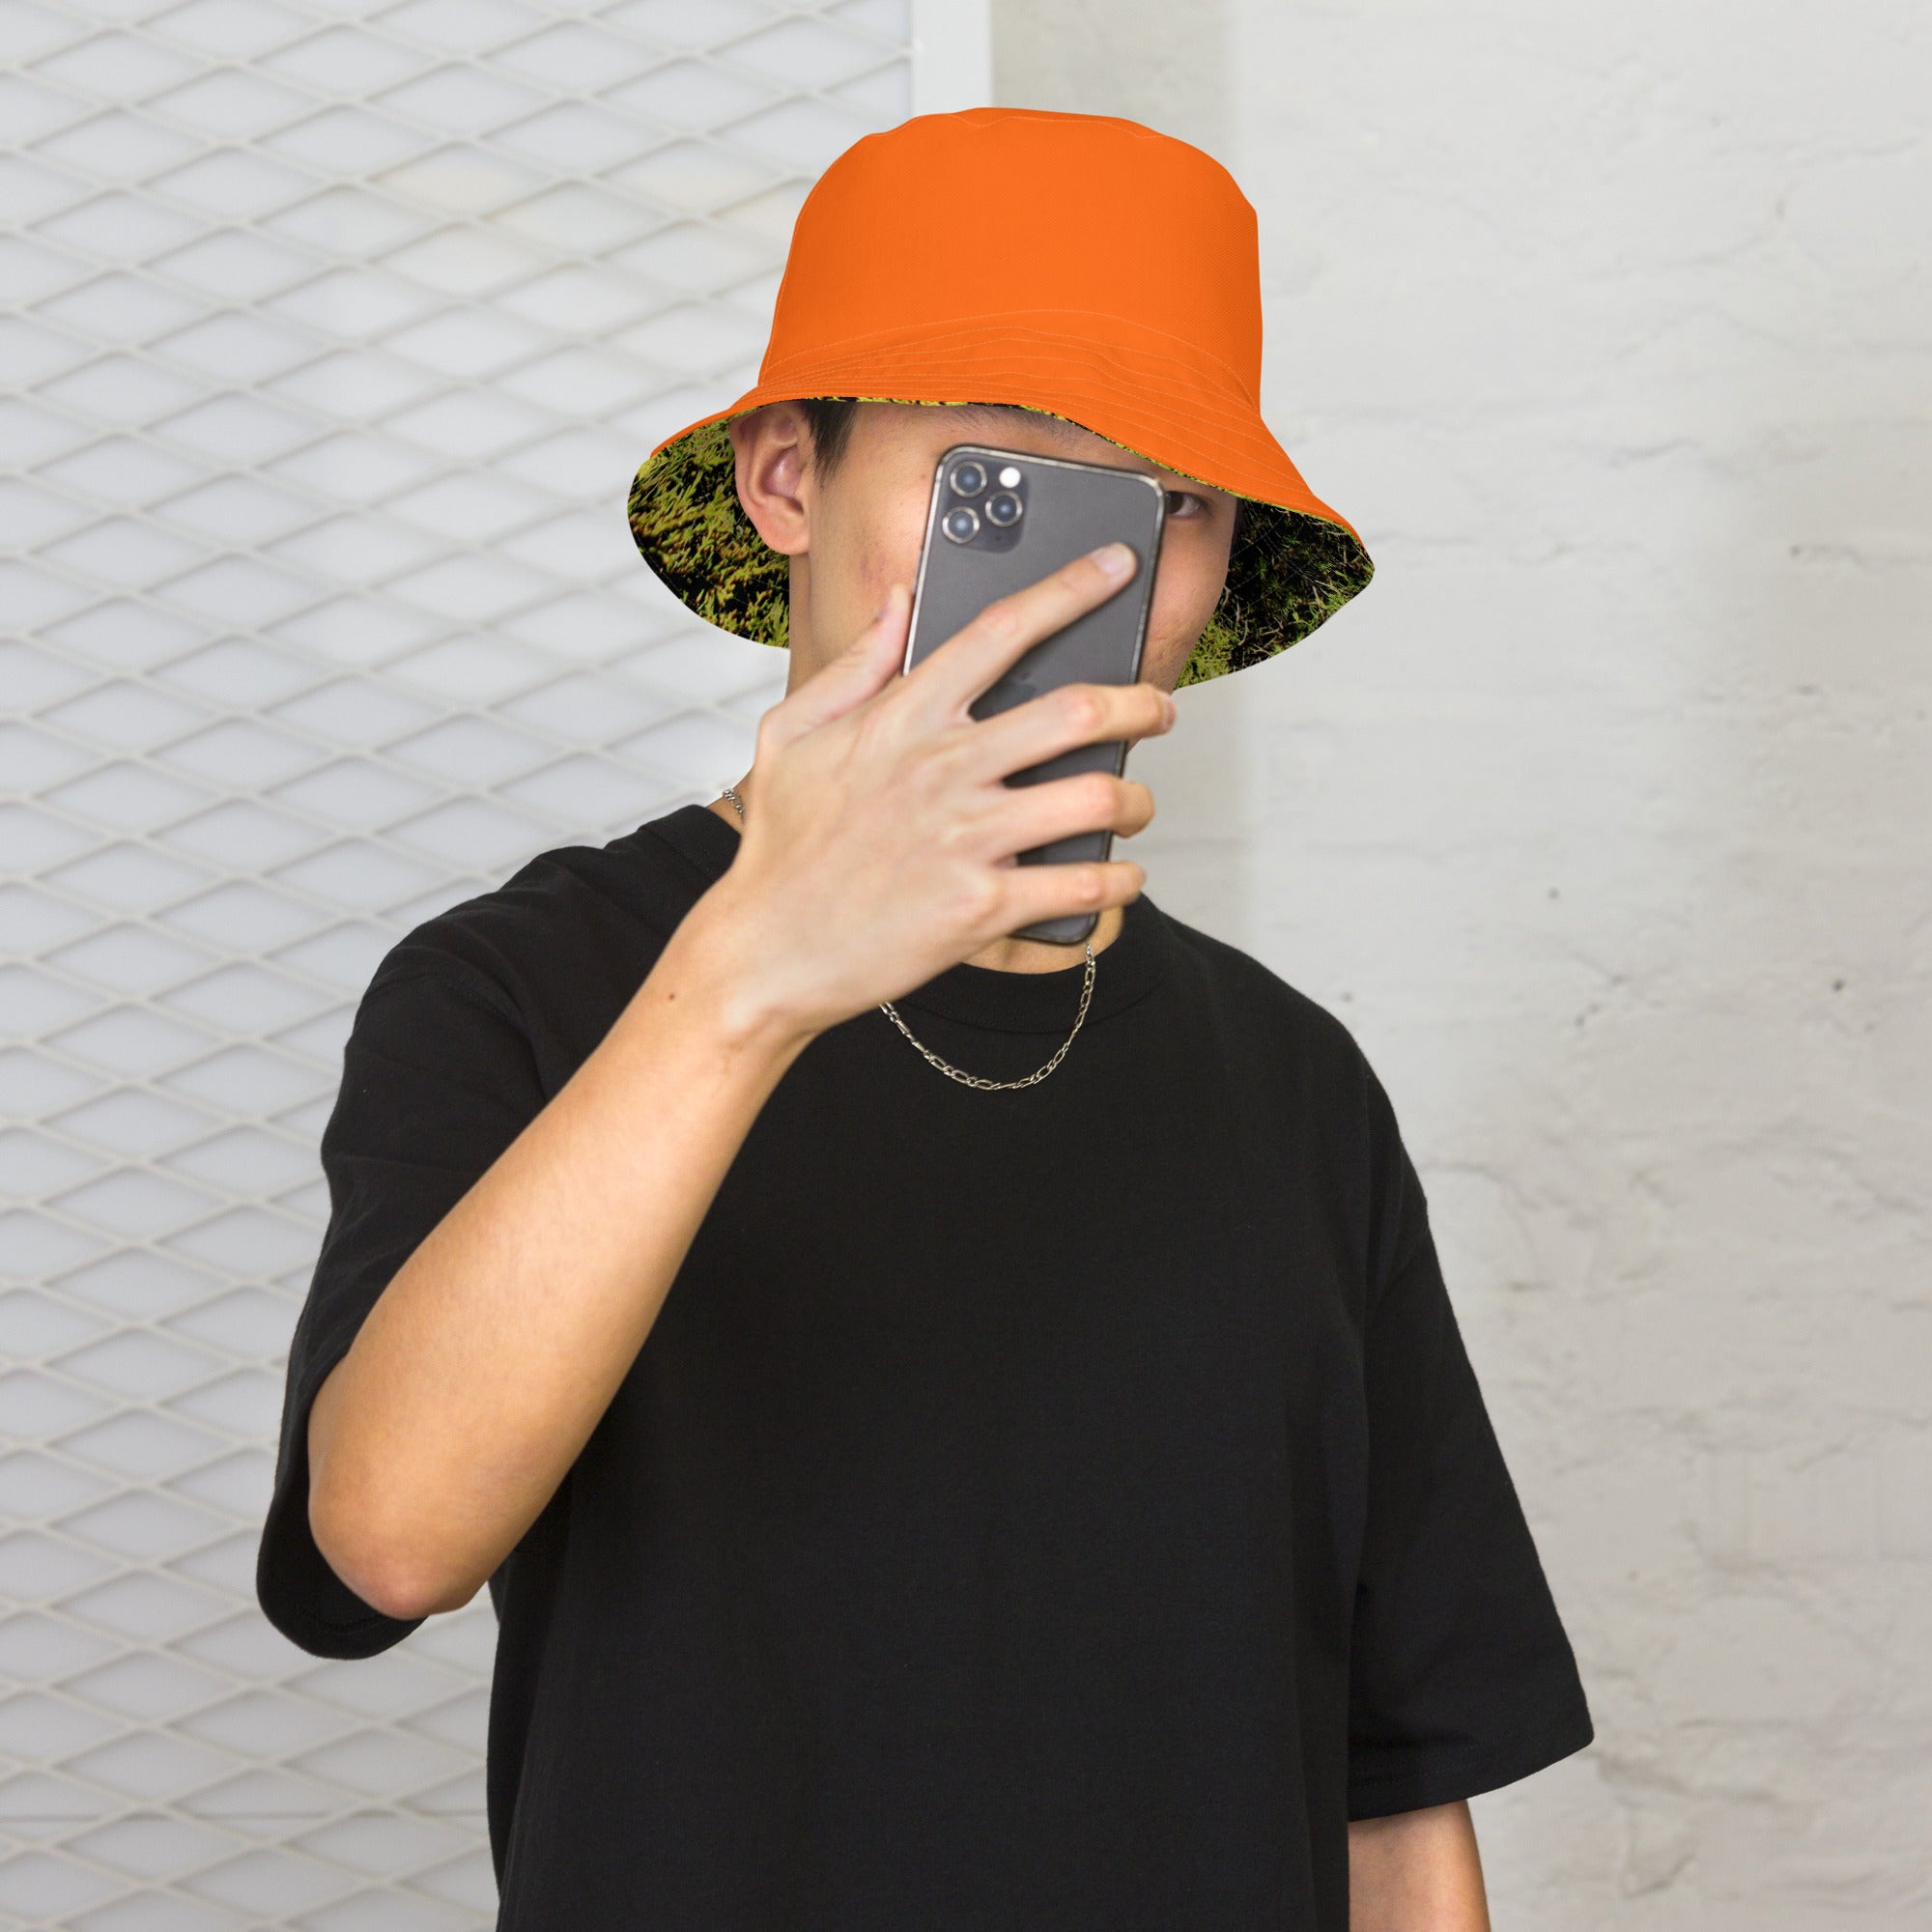 Real Cedar Camo and Hunter's Orange Reversible Bucket Hat